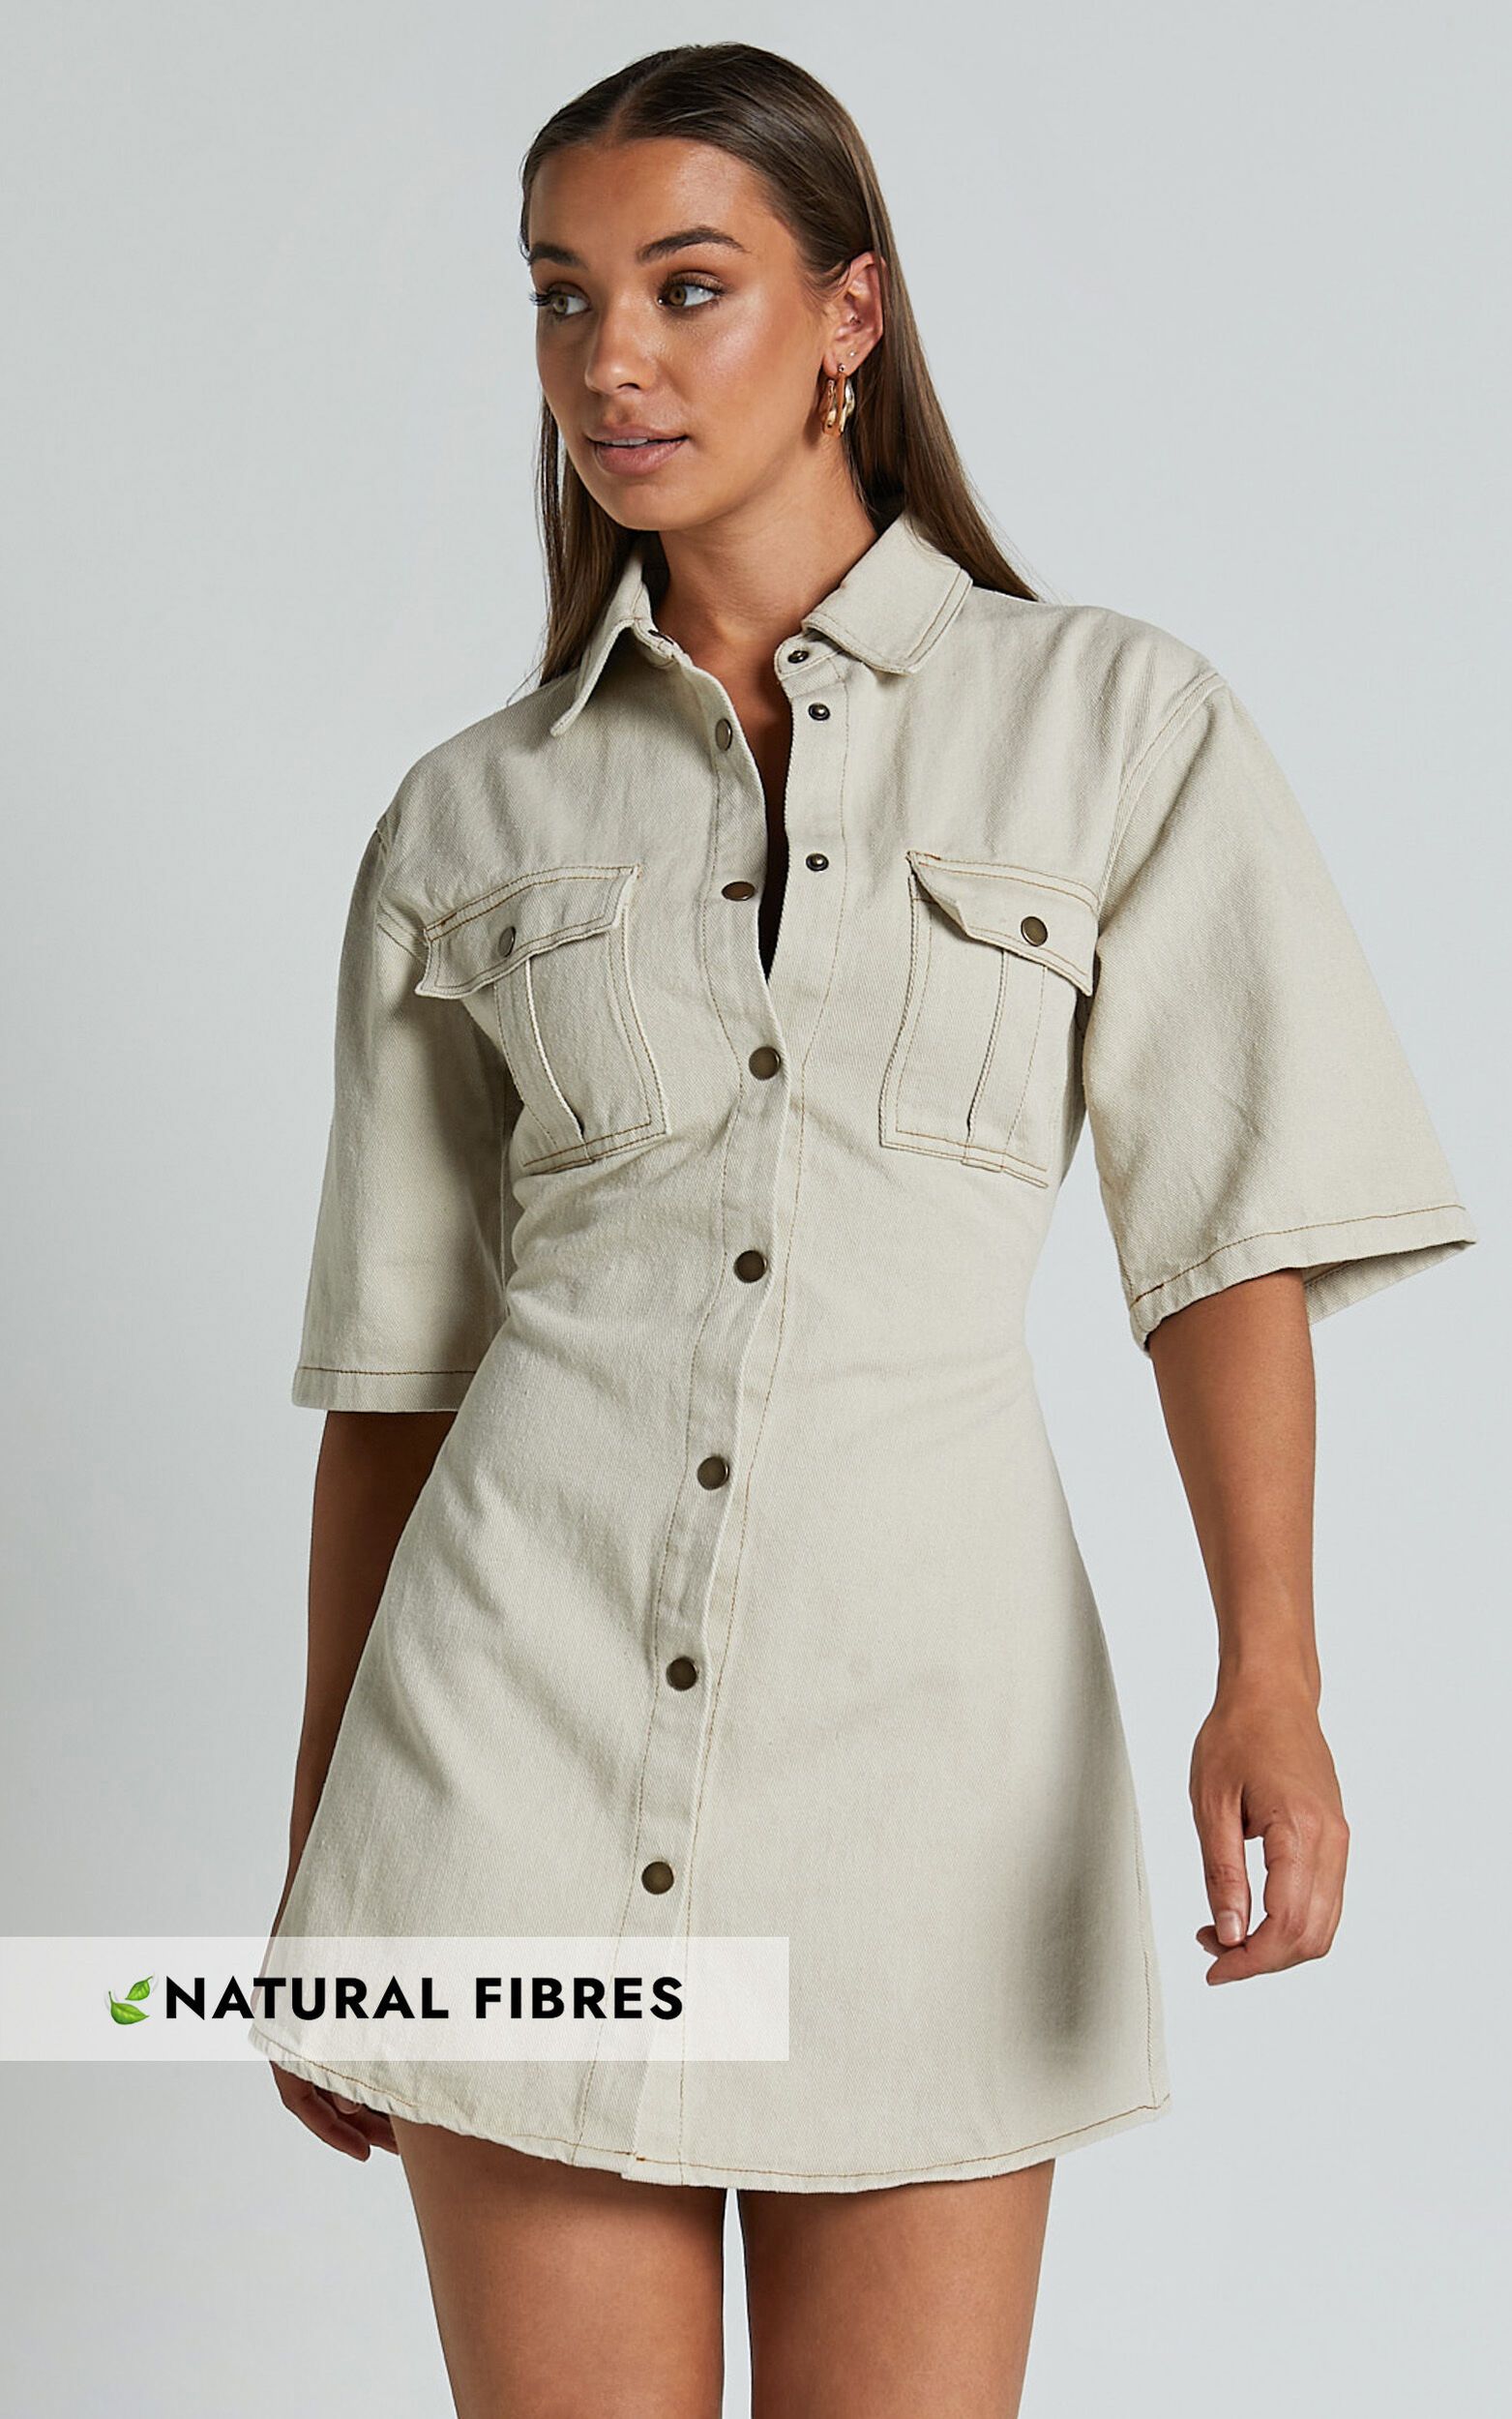 Leilani Mini Dress - Denim Short Sleeve Button Up Dress in Natural | Showpo (ANZ)